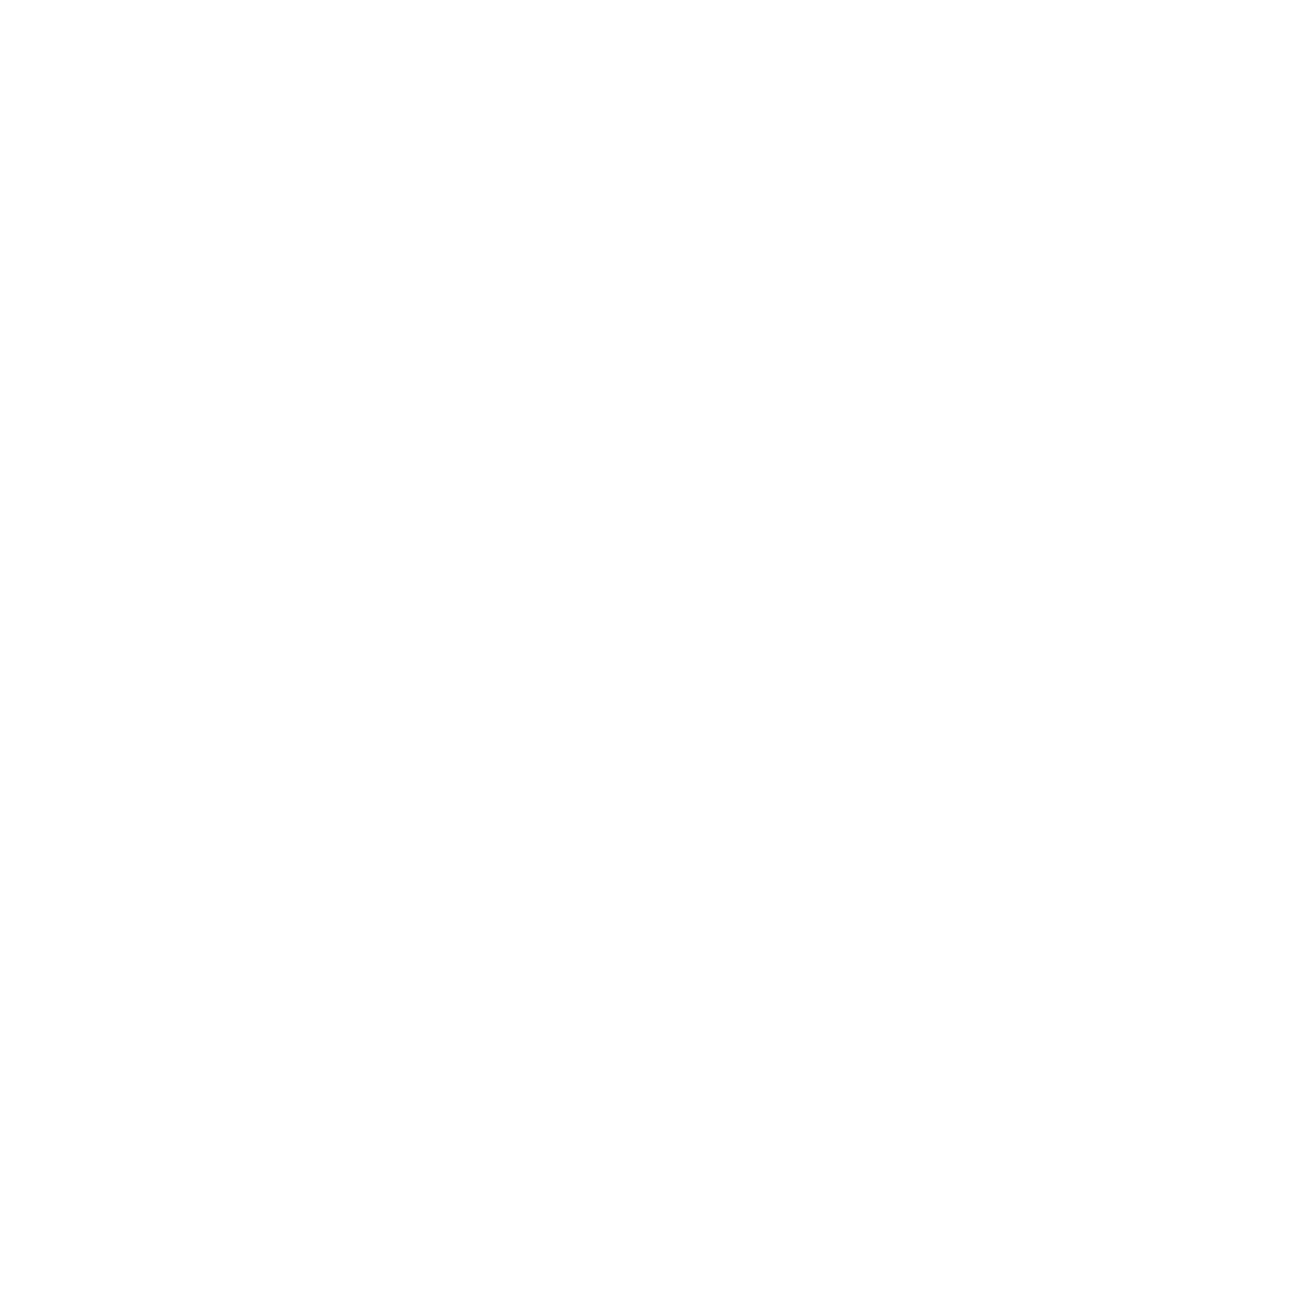 Del Pomar Hotel Boutique